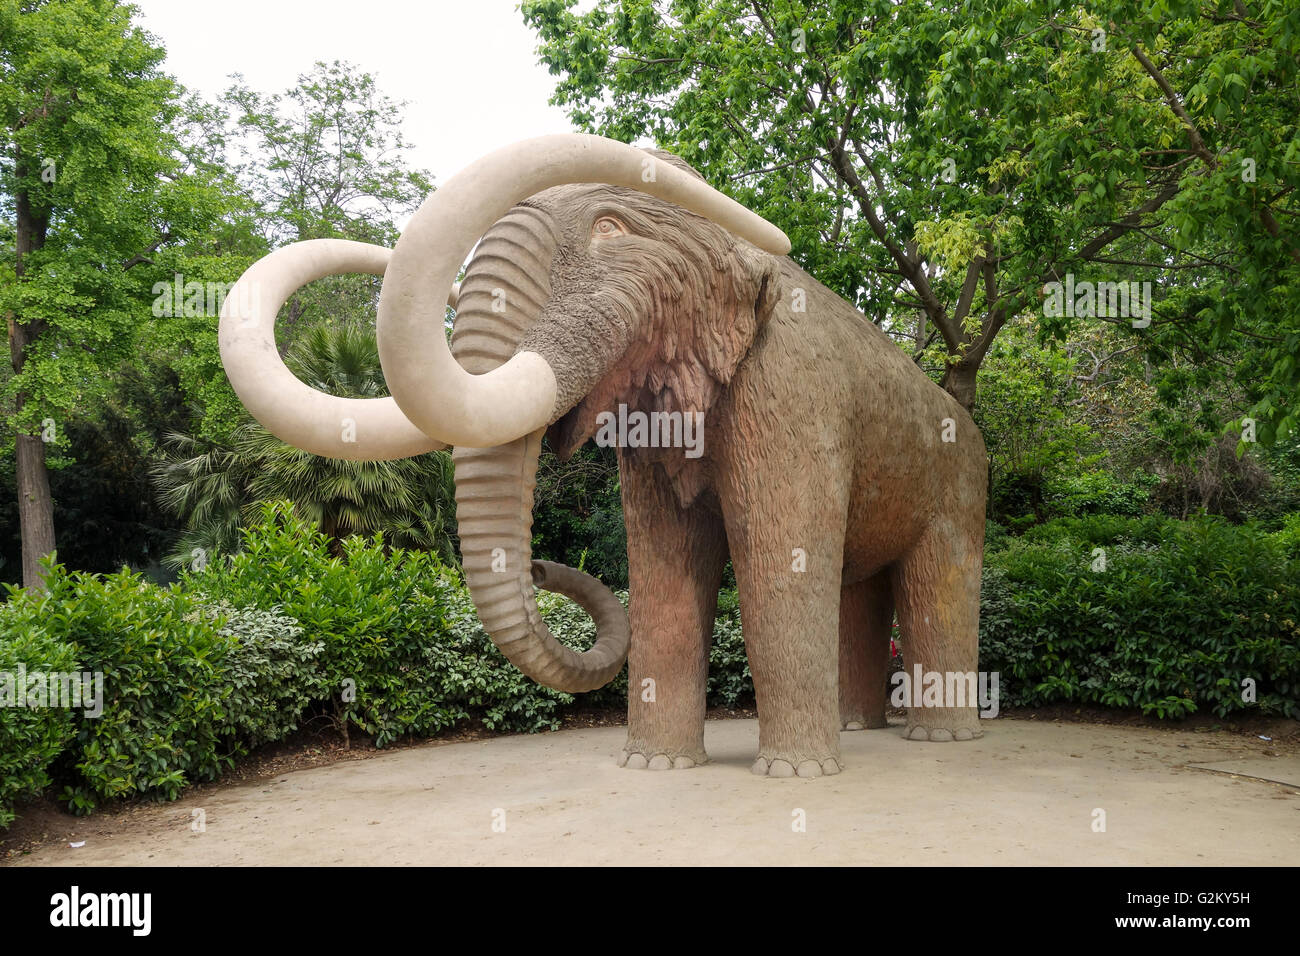 Giant stone Mammoth, Parc de la Ciutadella, Barcelona, Catalonia, Spain Stock Photo